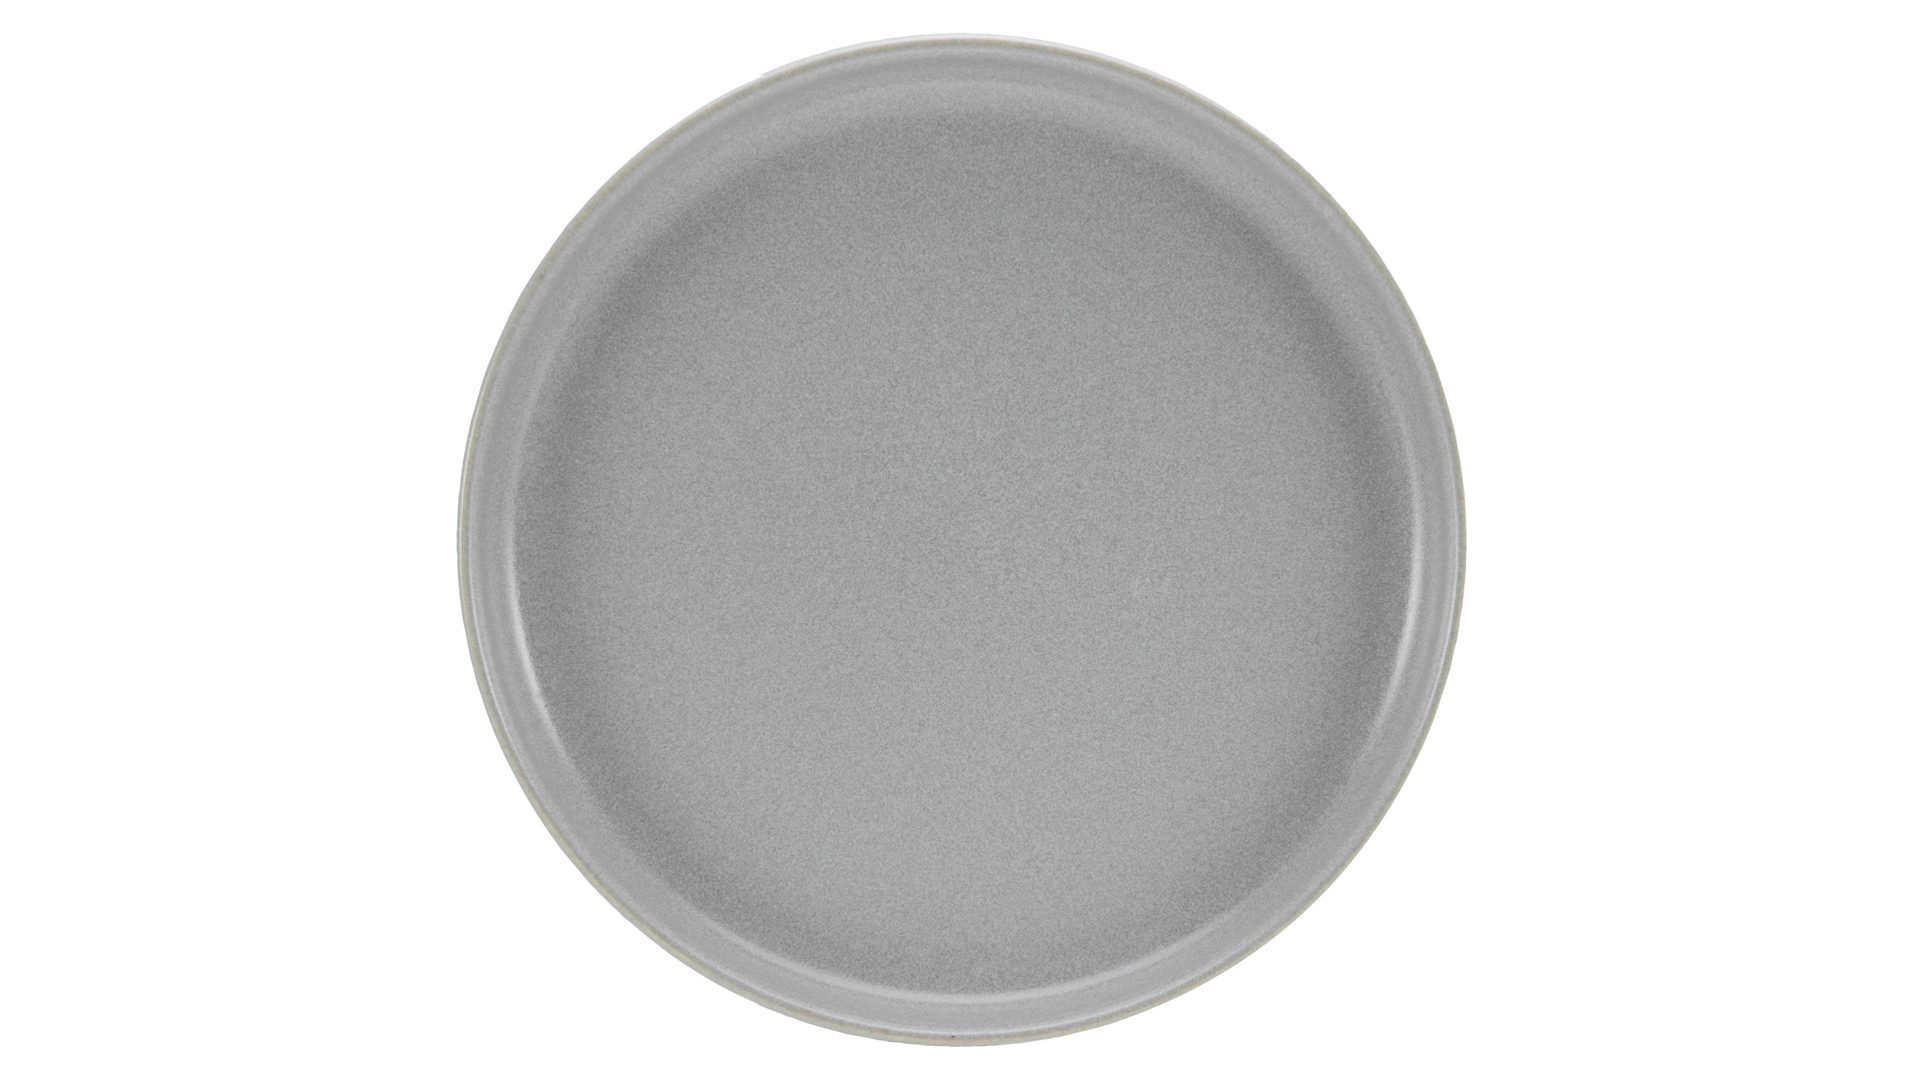 Essteller Creatable aus Keramik in Grau CREATABLE Uno – Speiseteller graues Steinzeug – Durchmesser ca. 28 cm